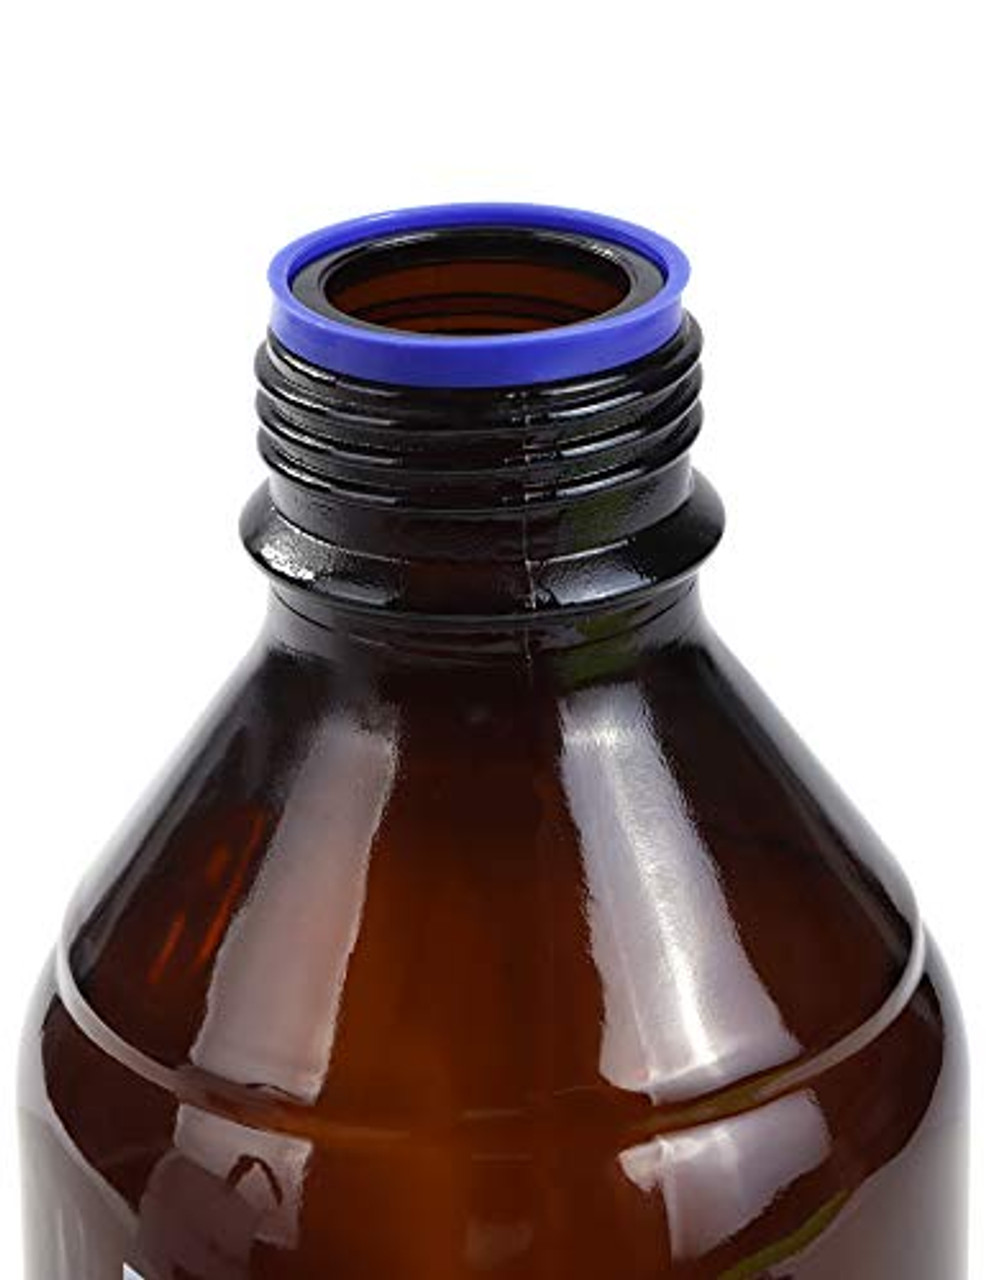 Amber Glass Blake Bottle with Polypropylene Cap, 3 oz